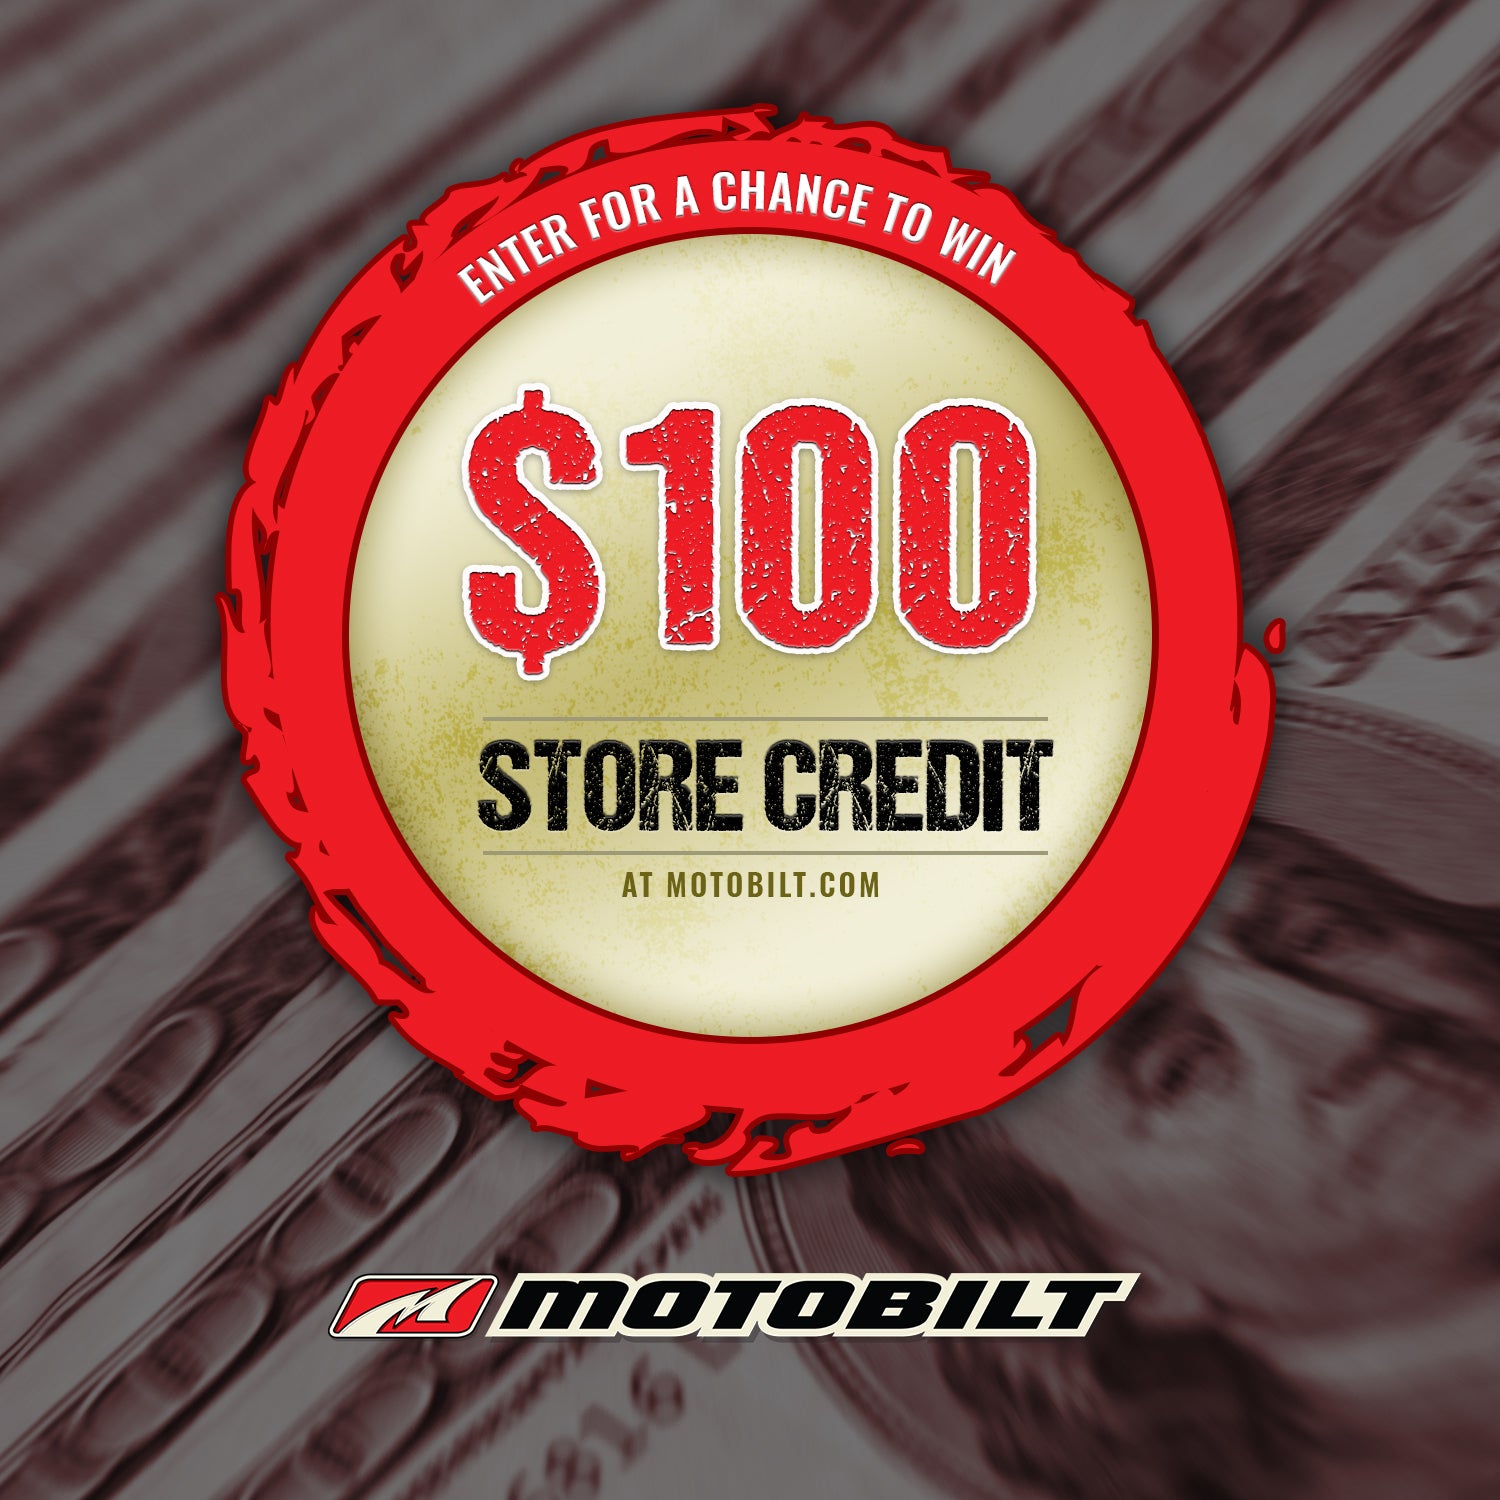 Win $100 Store Credit on Motobilt.com!